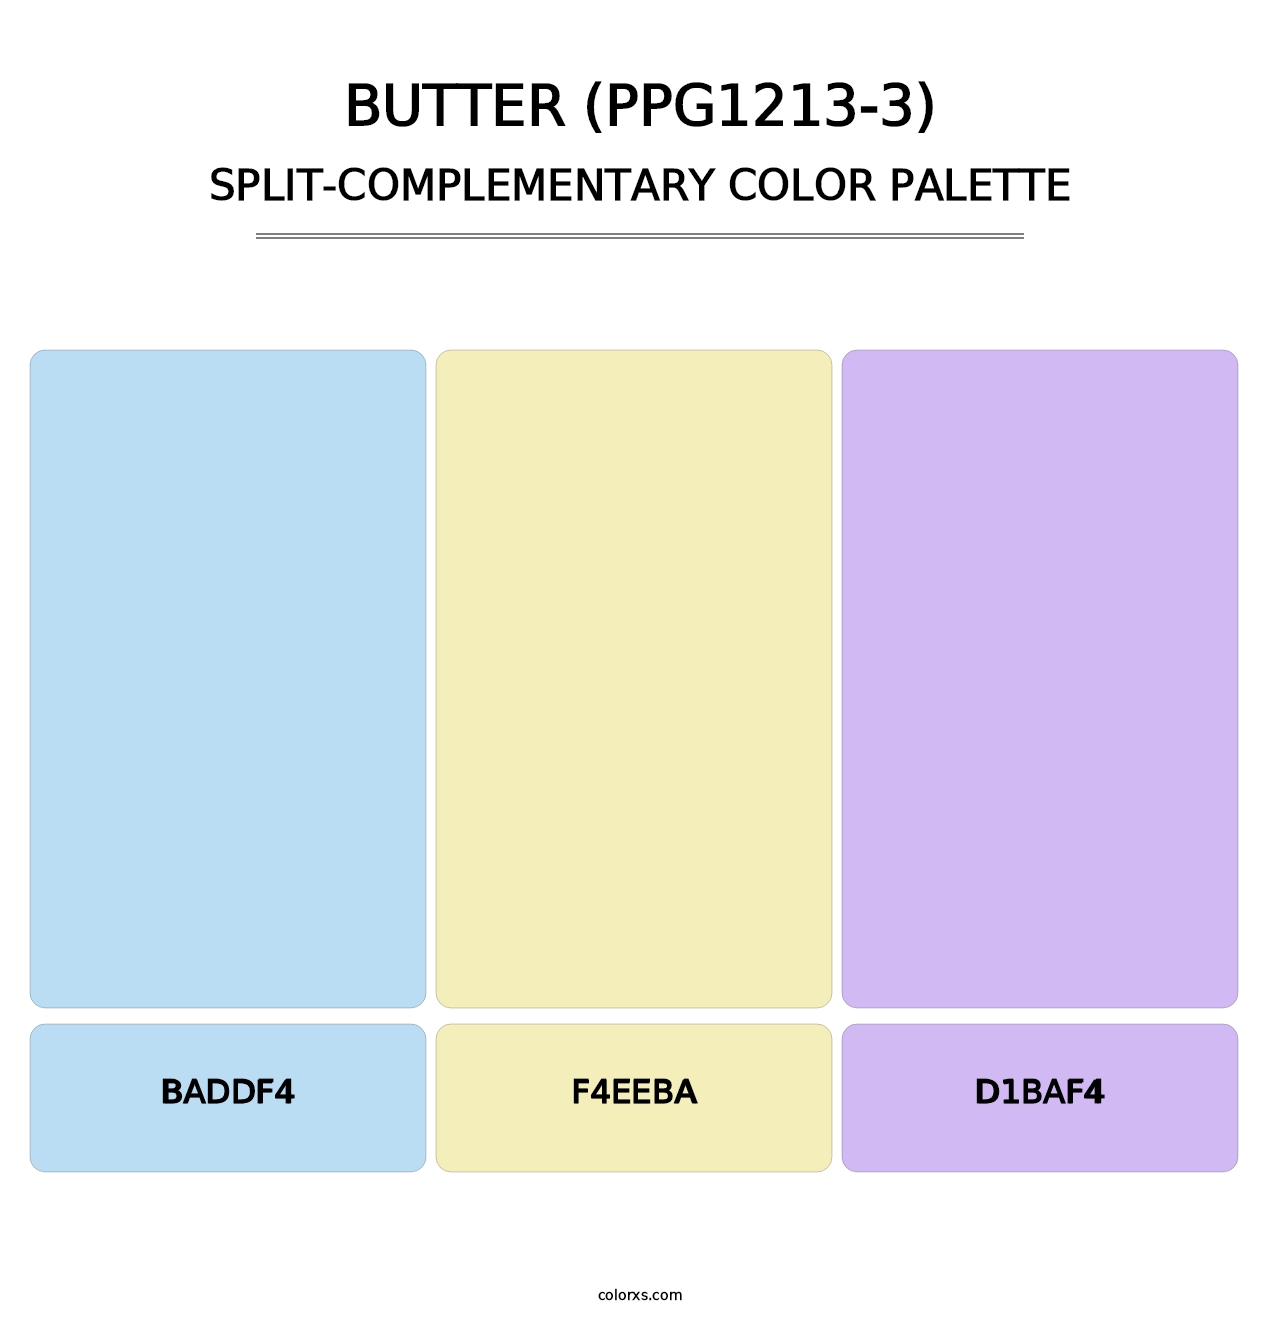 Butter (PPG1213-3) - Split-Complementary Color Palette